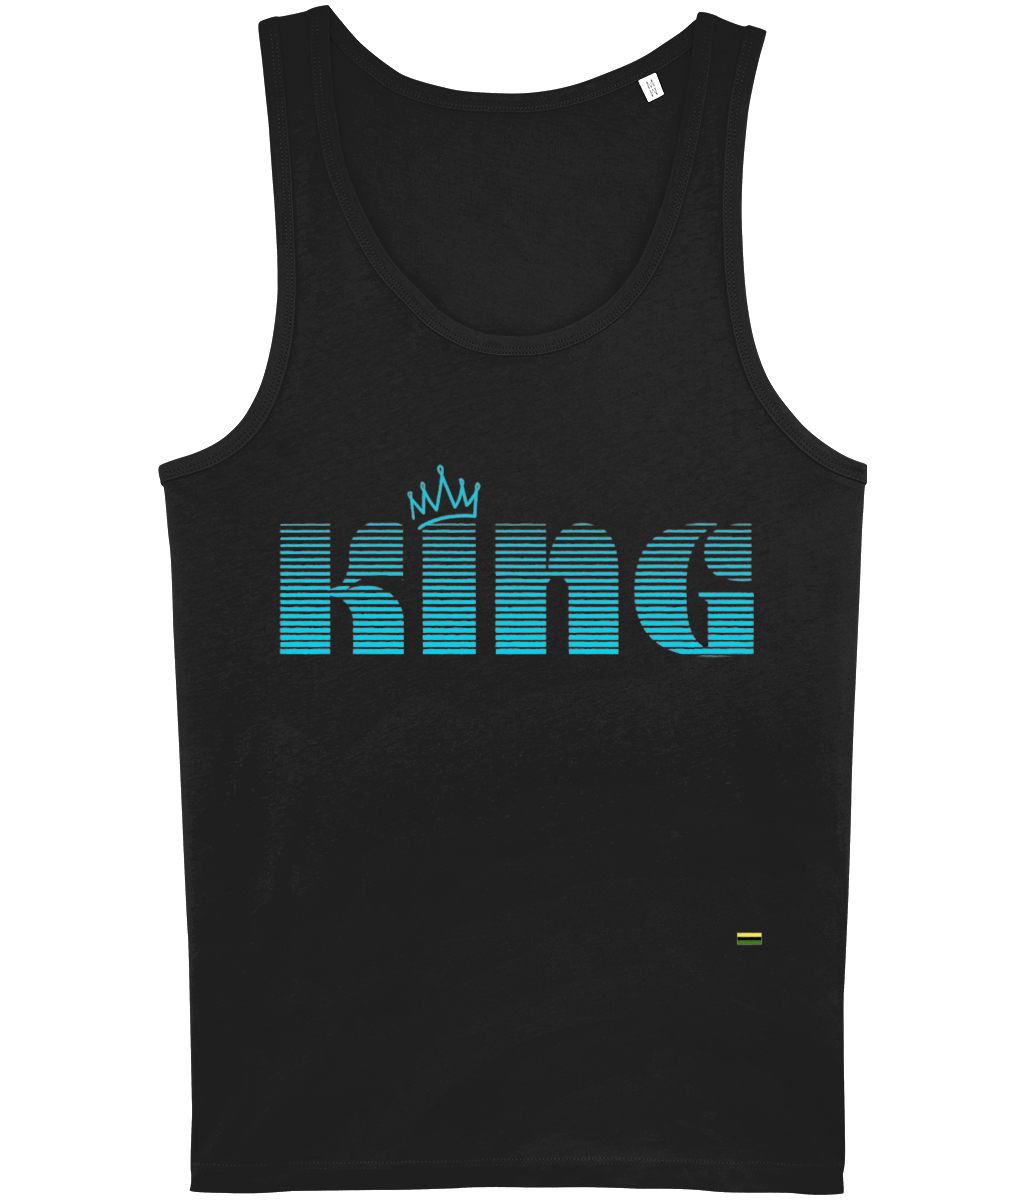 King Crown Organic Cotton Vest Top